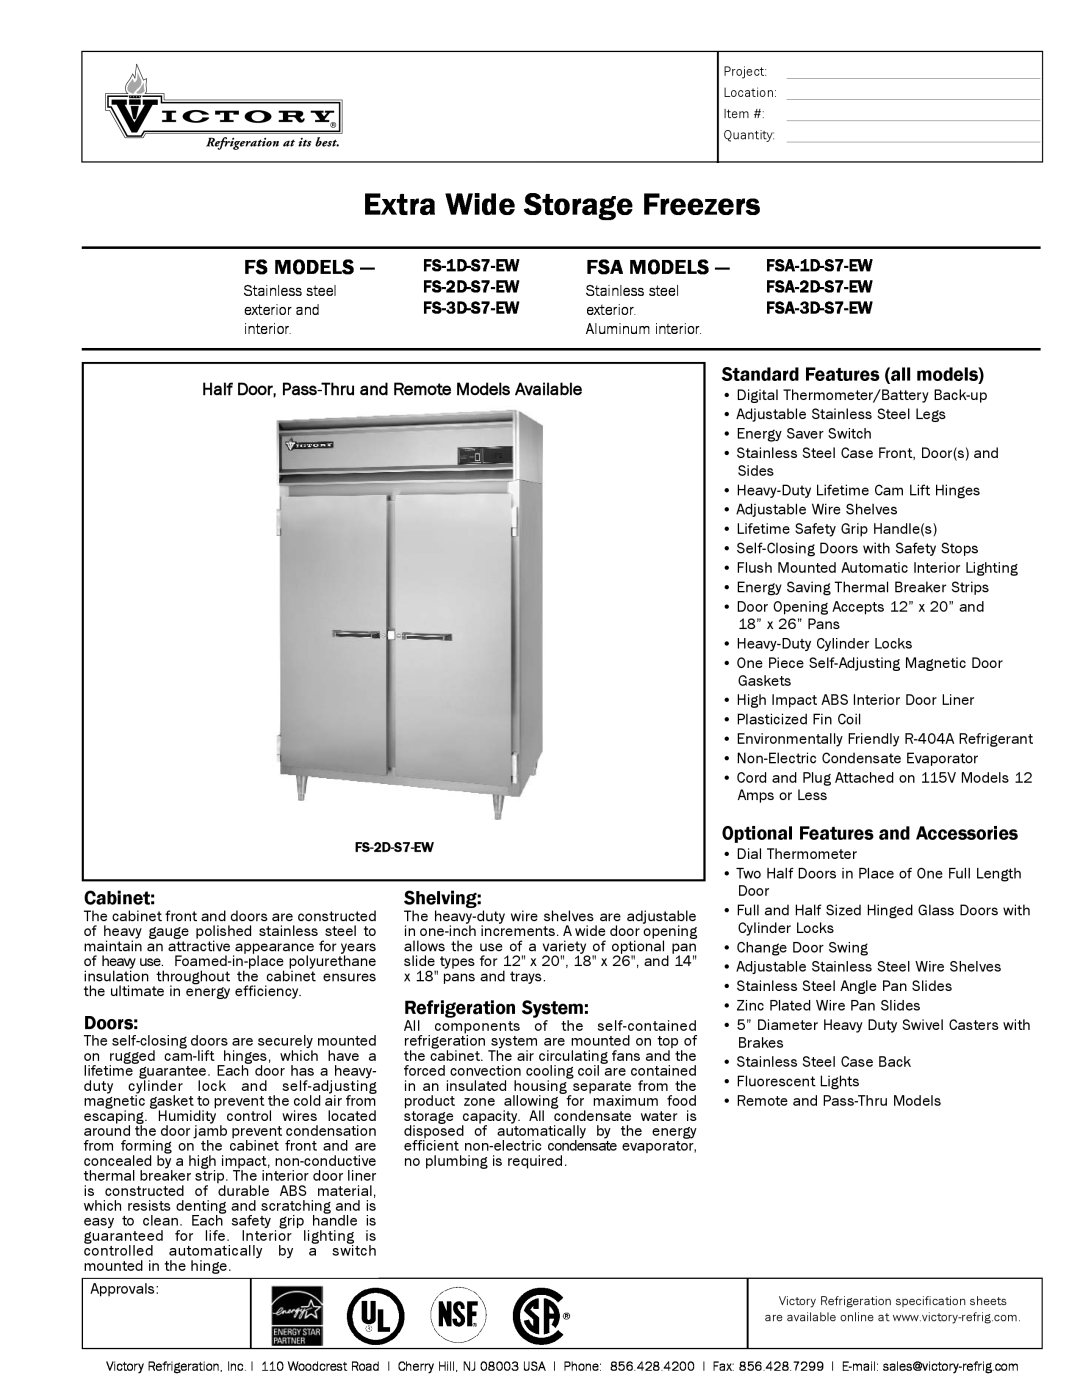 Victory Refrigeration FSA-3D-S7-EW specifications Half Door, Pass-Thruand Remote Models Available, Fs Models, Fsa Models 